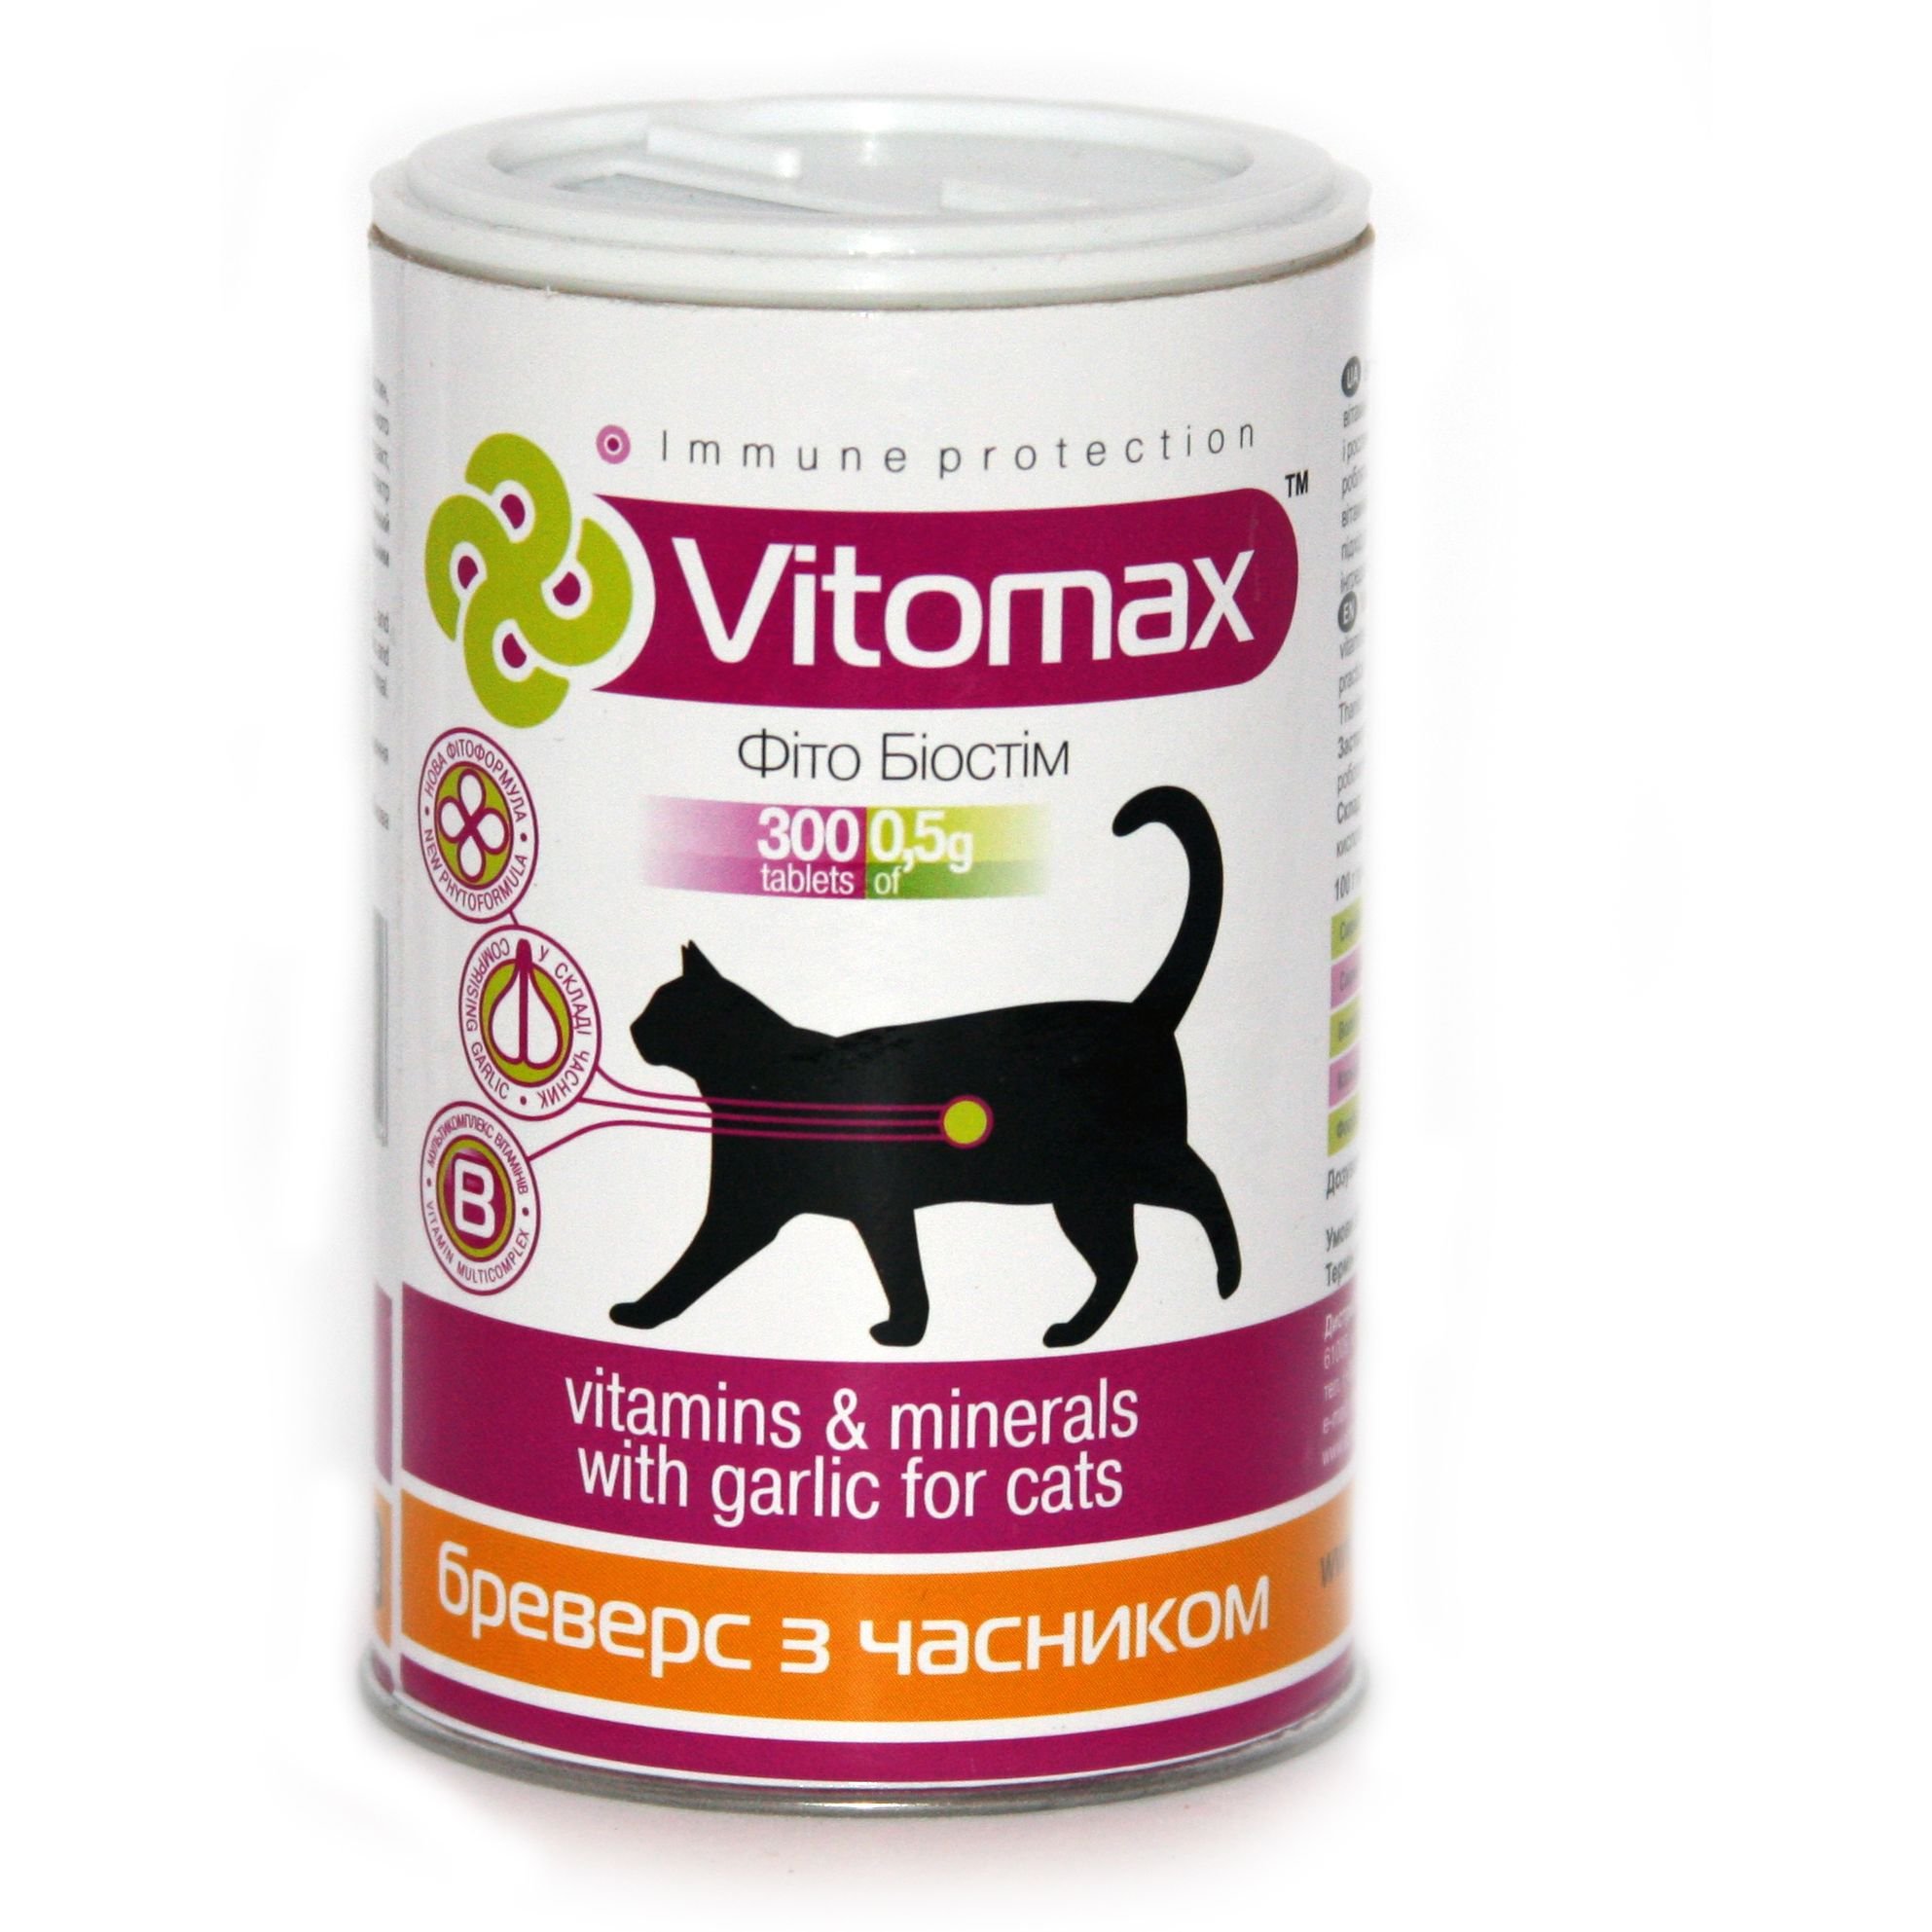 Витамины Vitomax Бреверс с пивными дрожжами и чесноком для кошек, 300 таблеток - фото 1